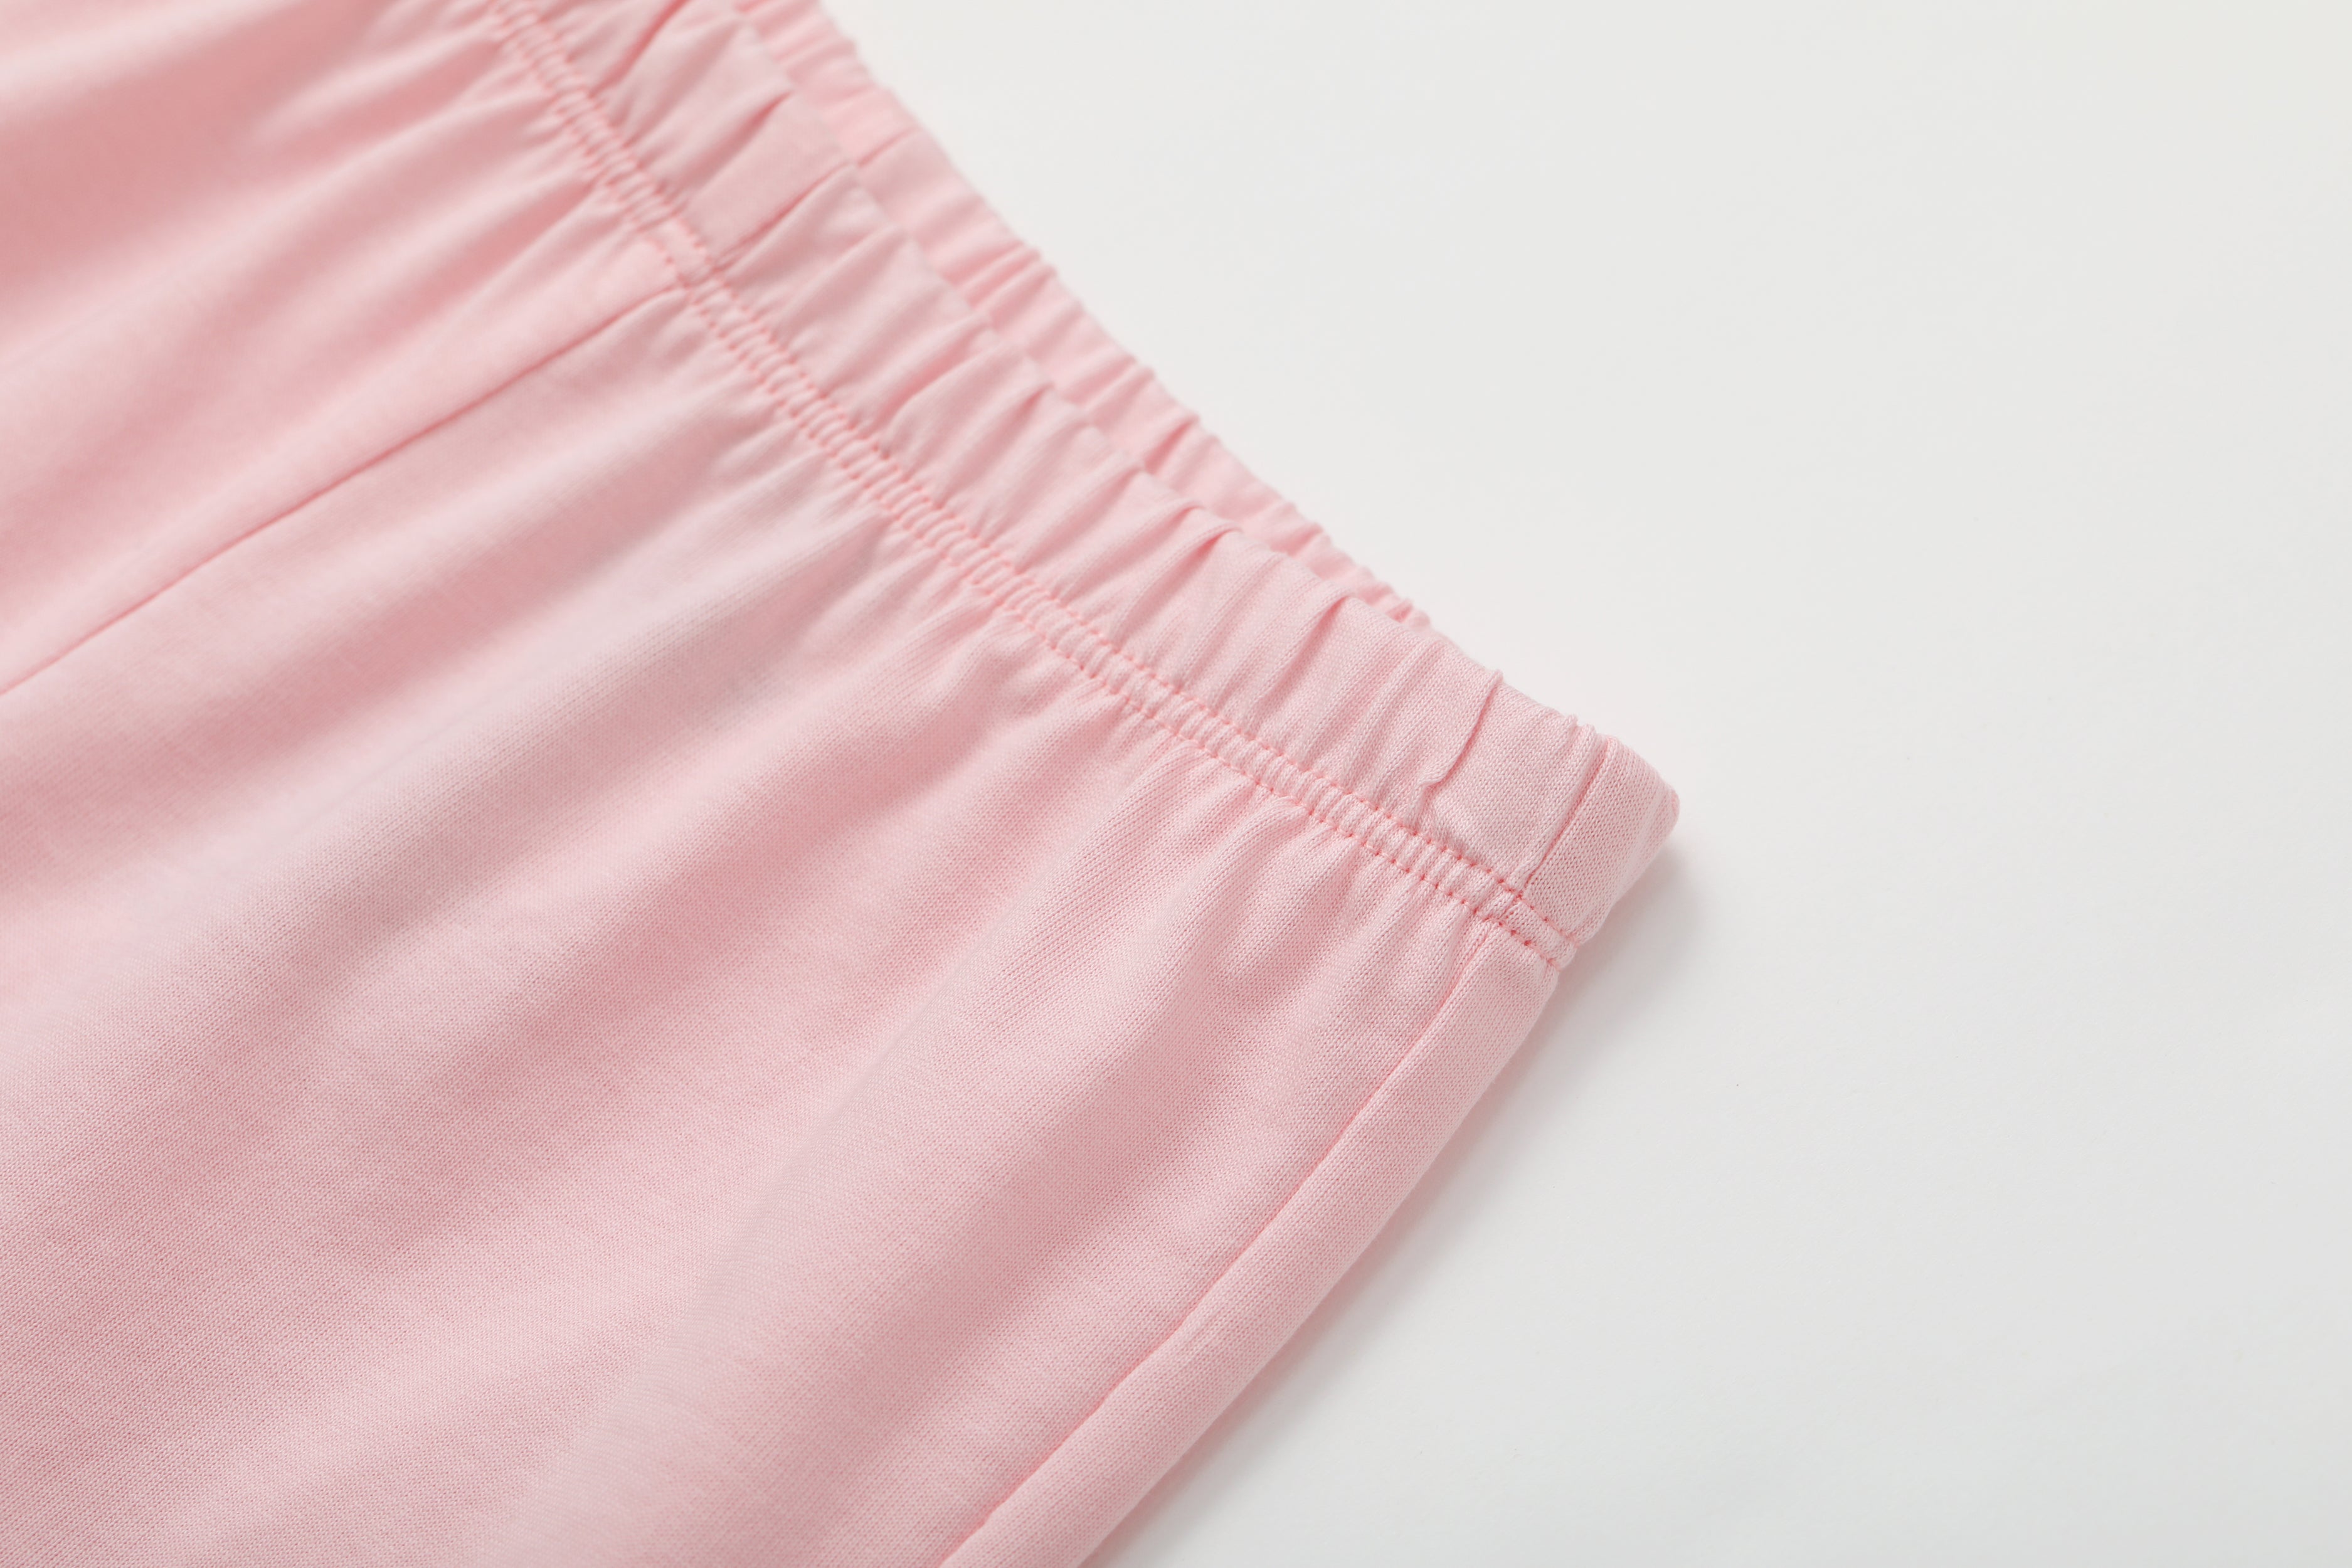 Vauva x Moomin - Baby Girls Short Sleeves Tee Set (Pink)  - Product Image 5